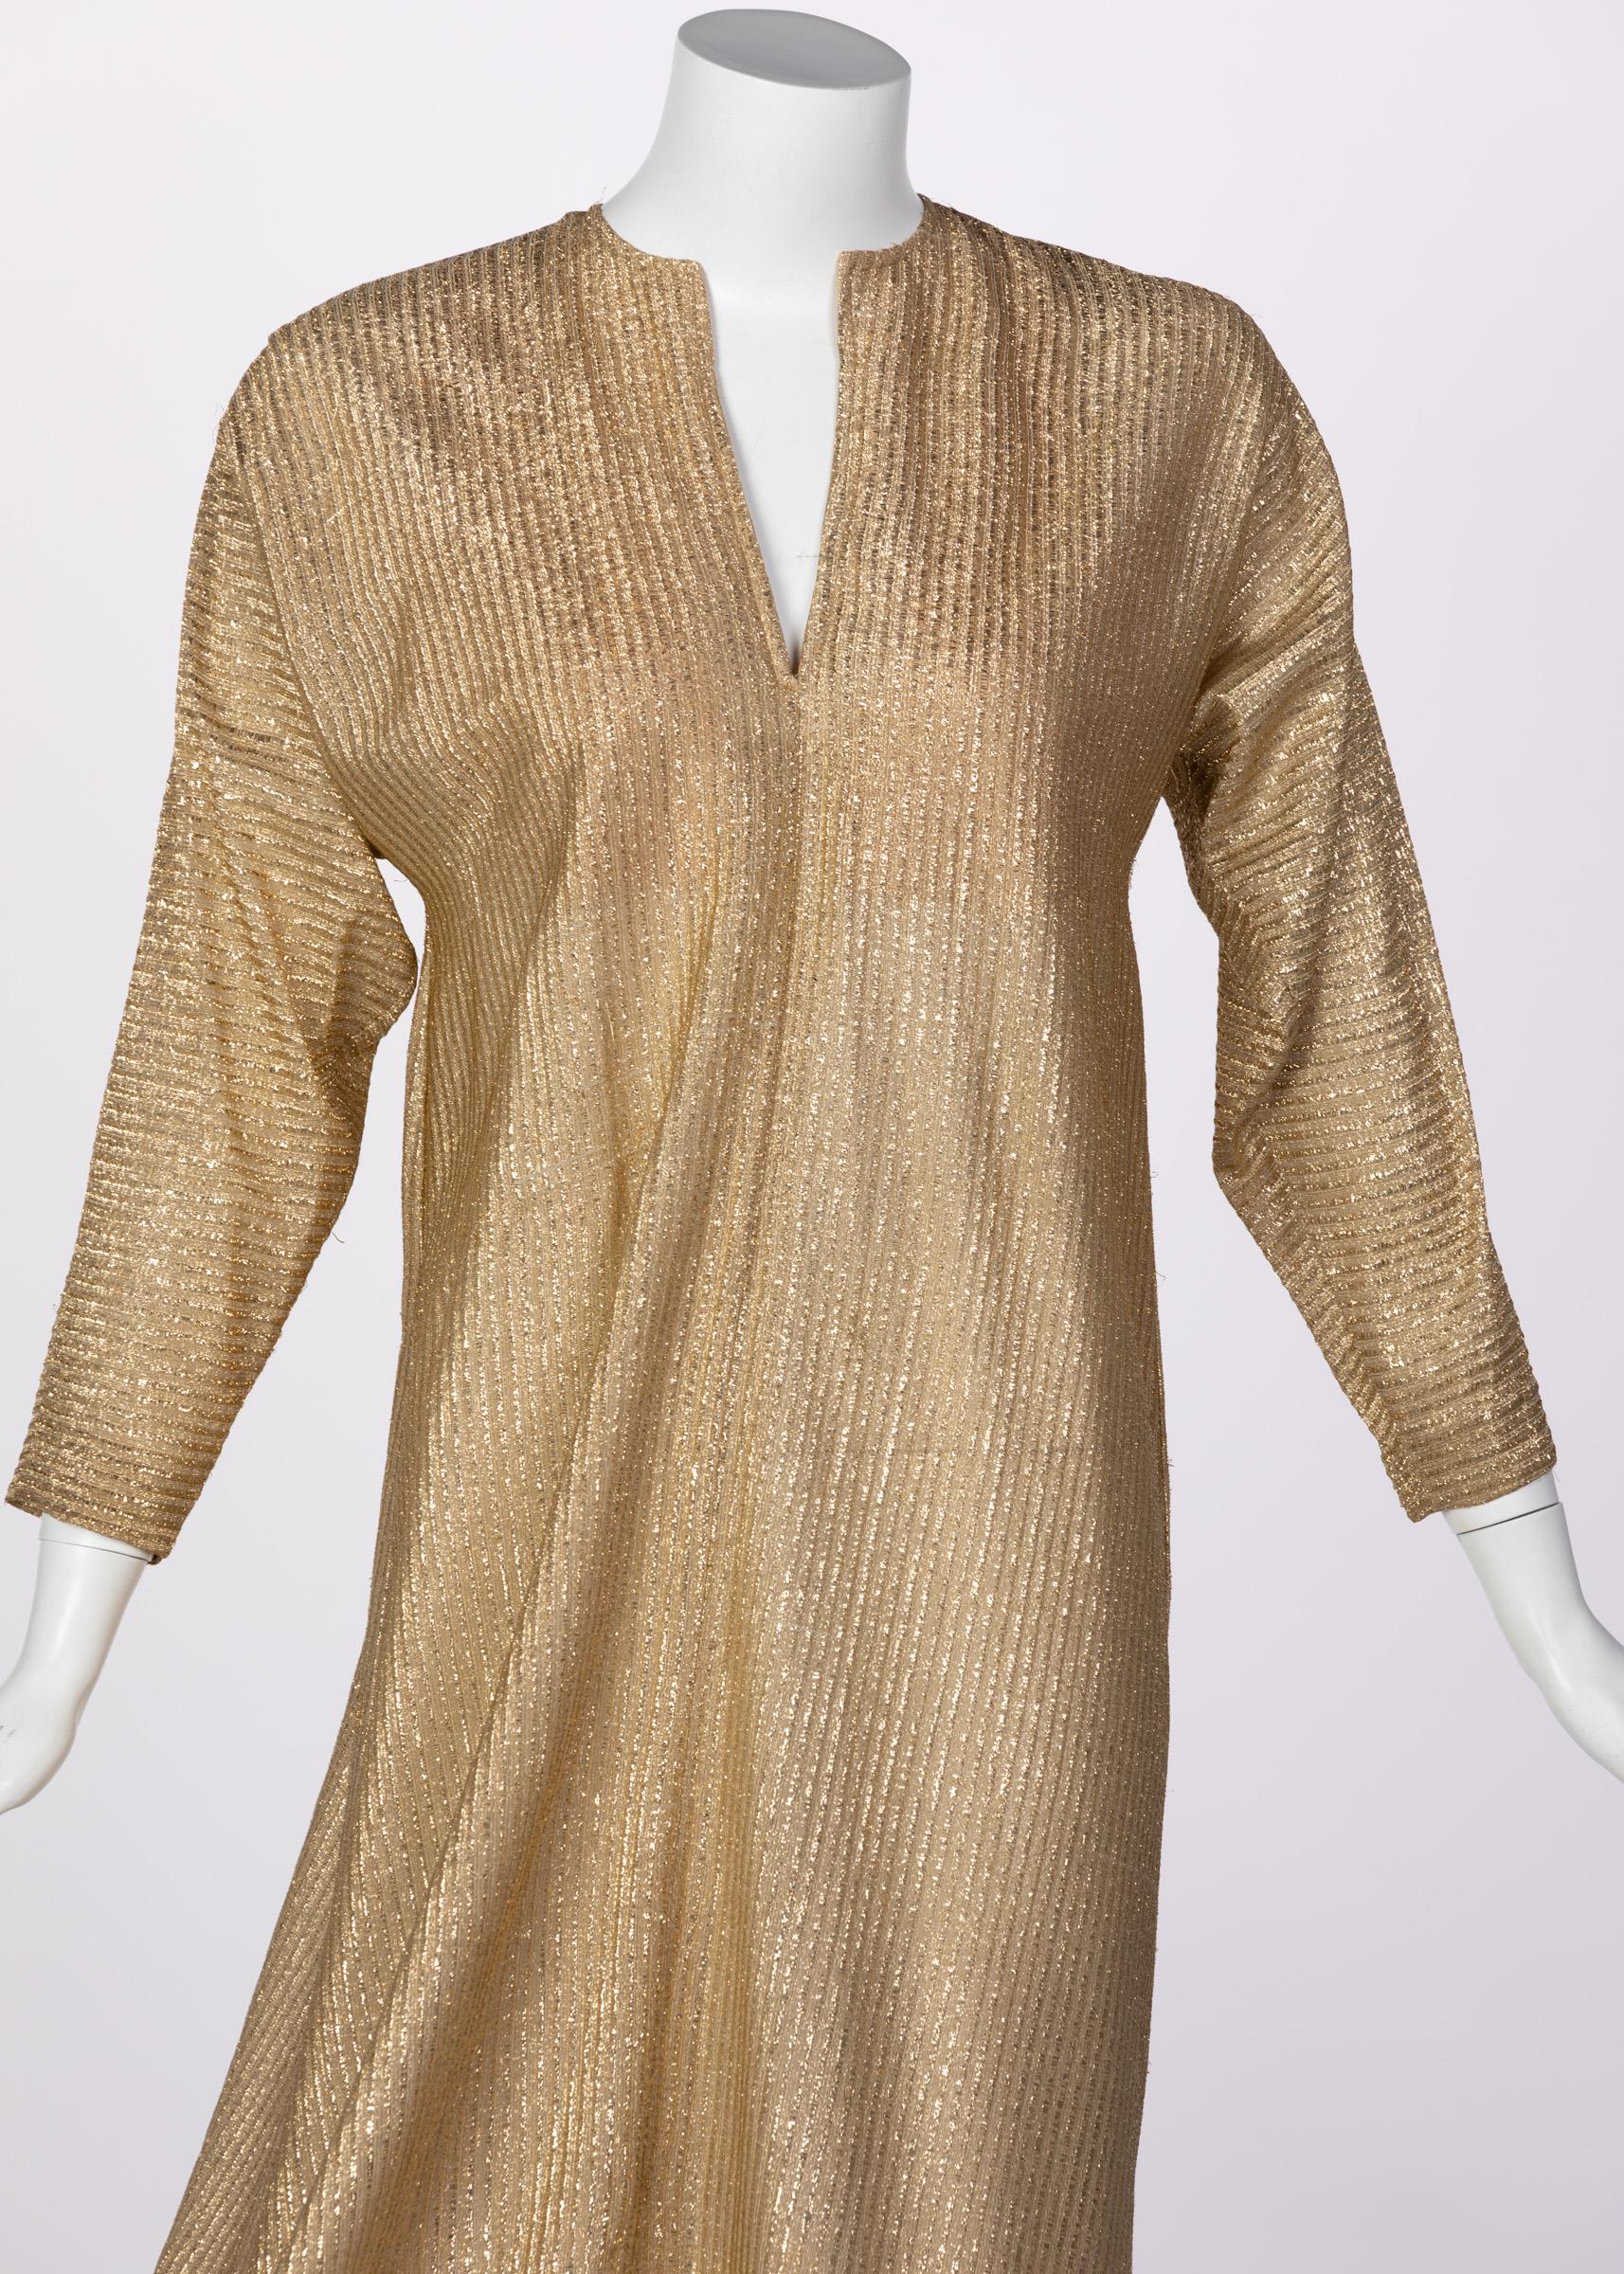 Brown Halston Metallic Gold Caftan dress, 1970s